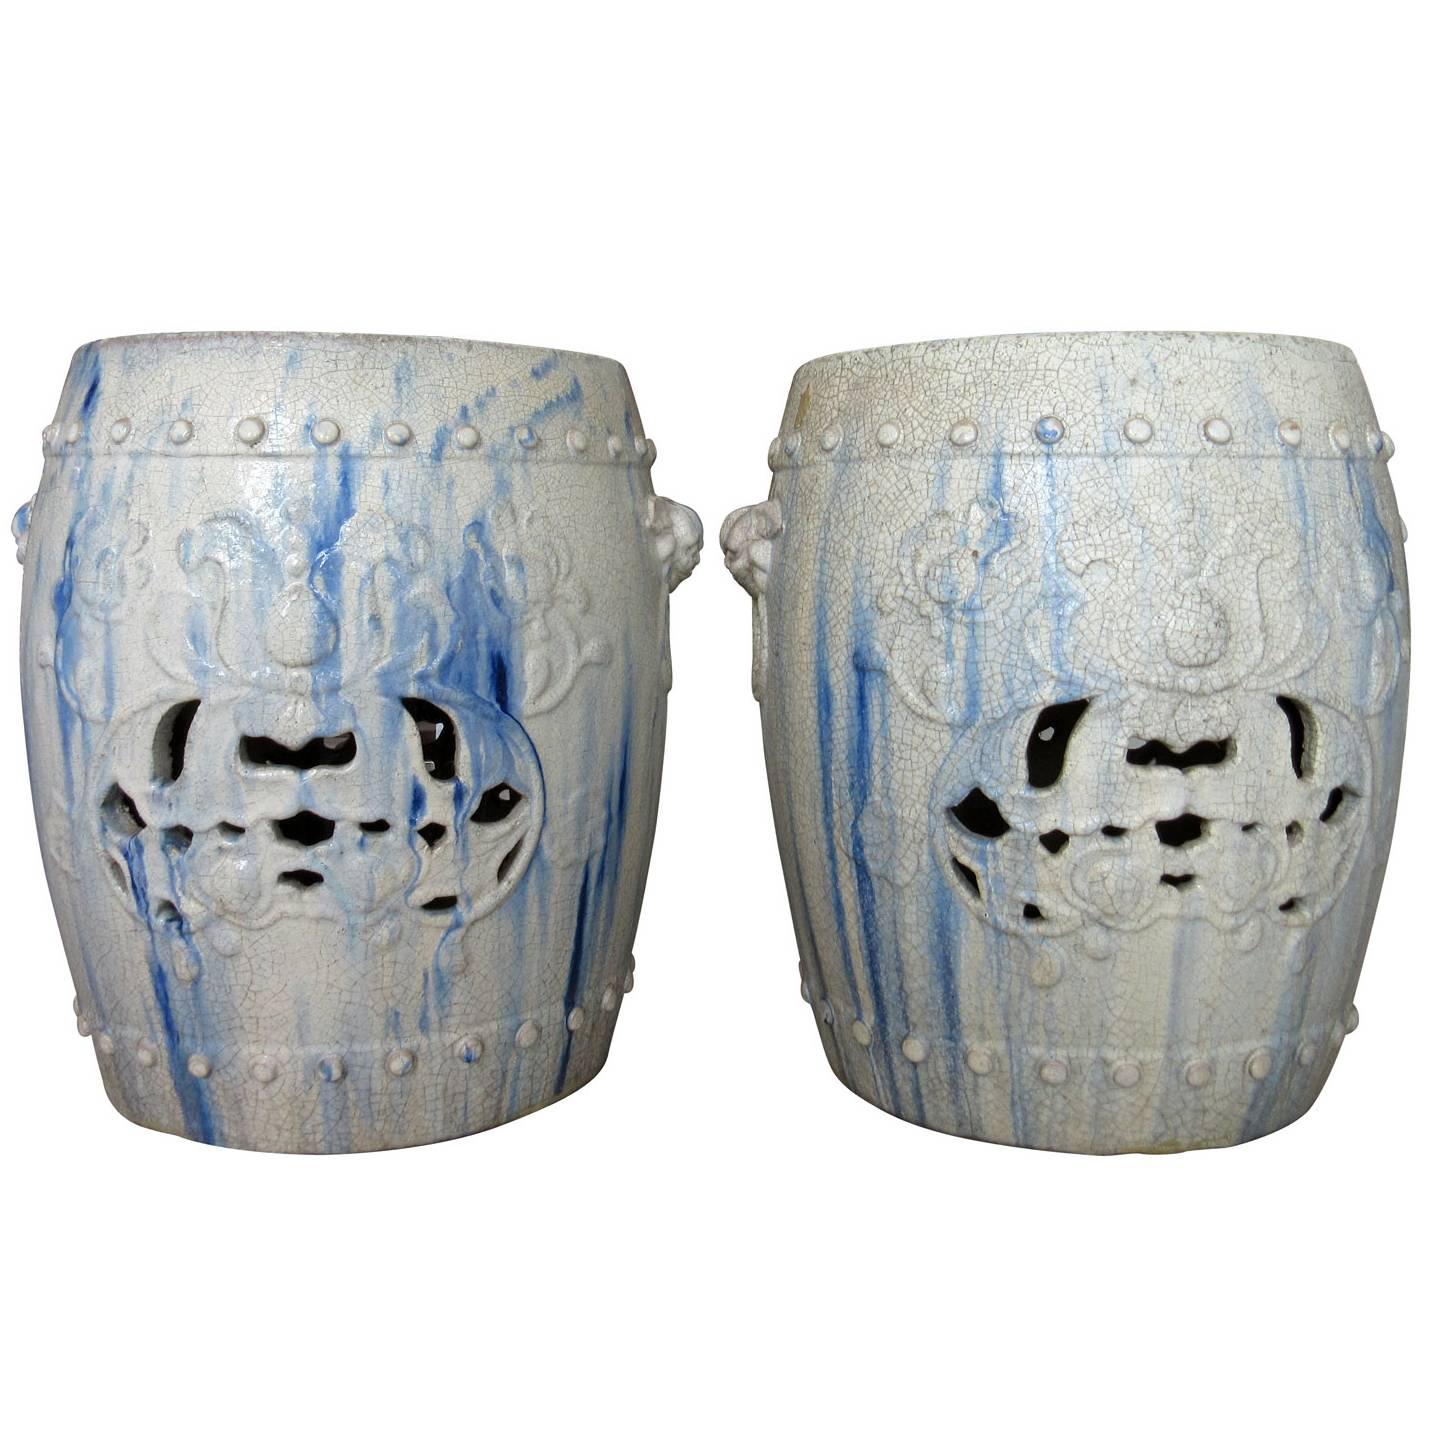 Pair of Chinese Ceramic Garden Seats with Blue Tye-Dye Glaze